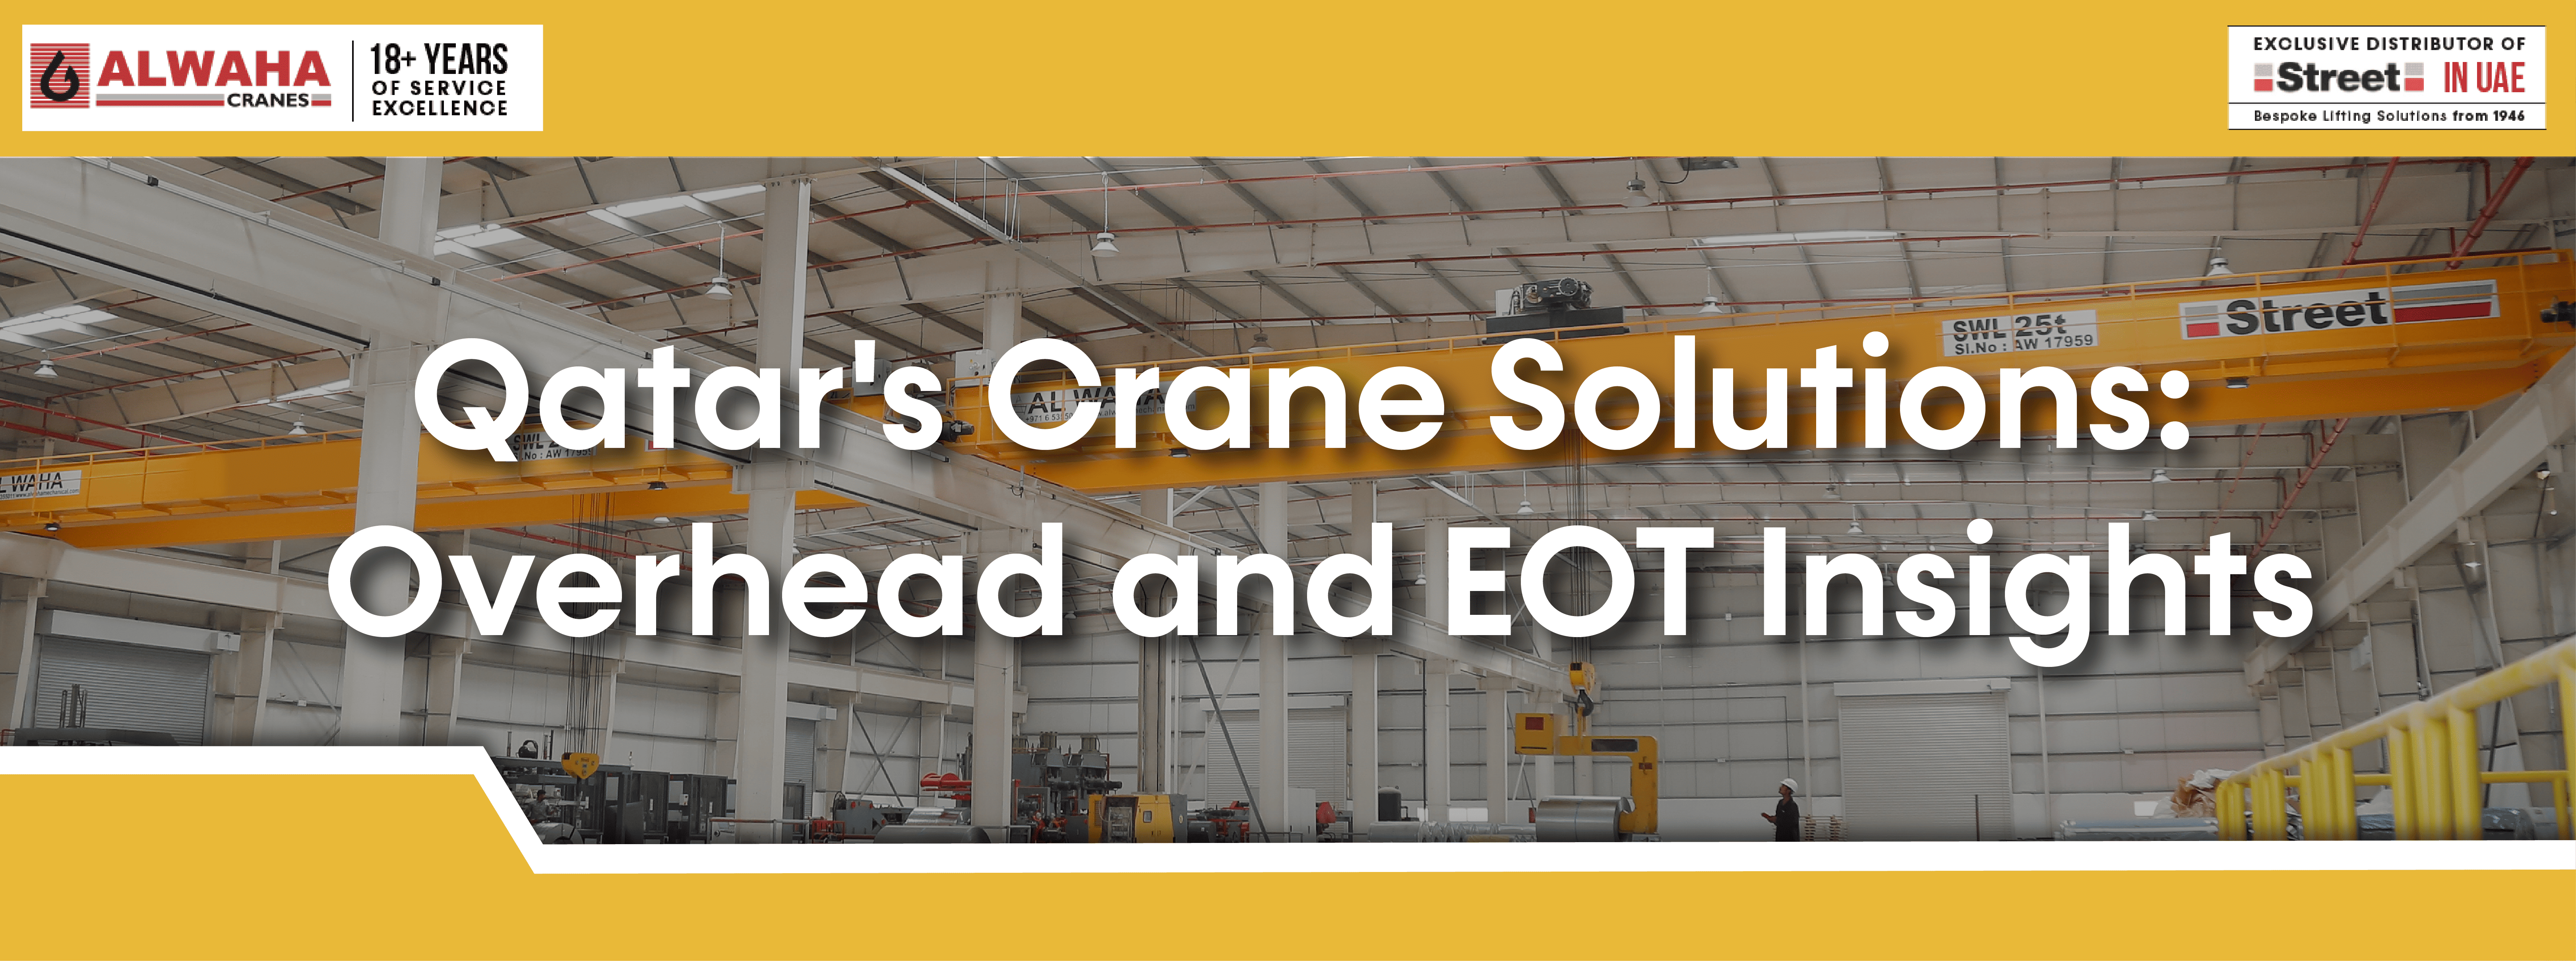 Qatar’s Crane Solutions: Overhead & EOT Insights